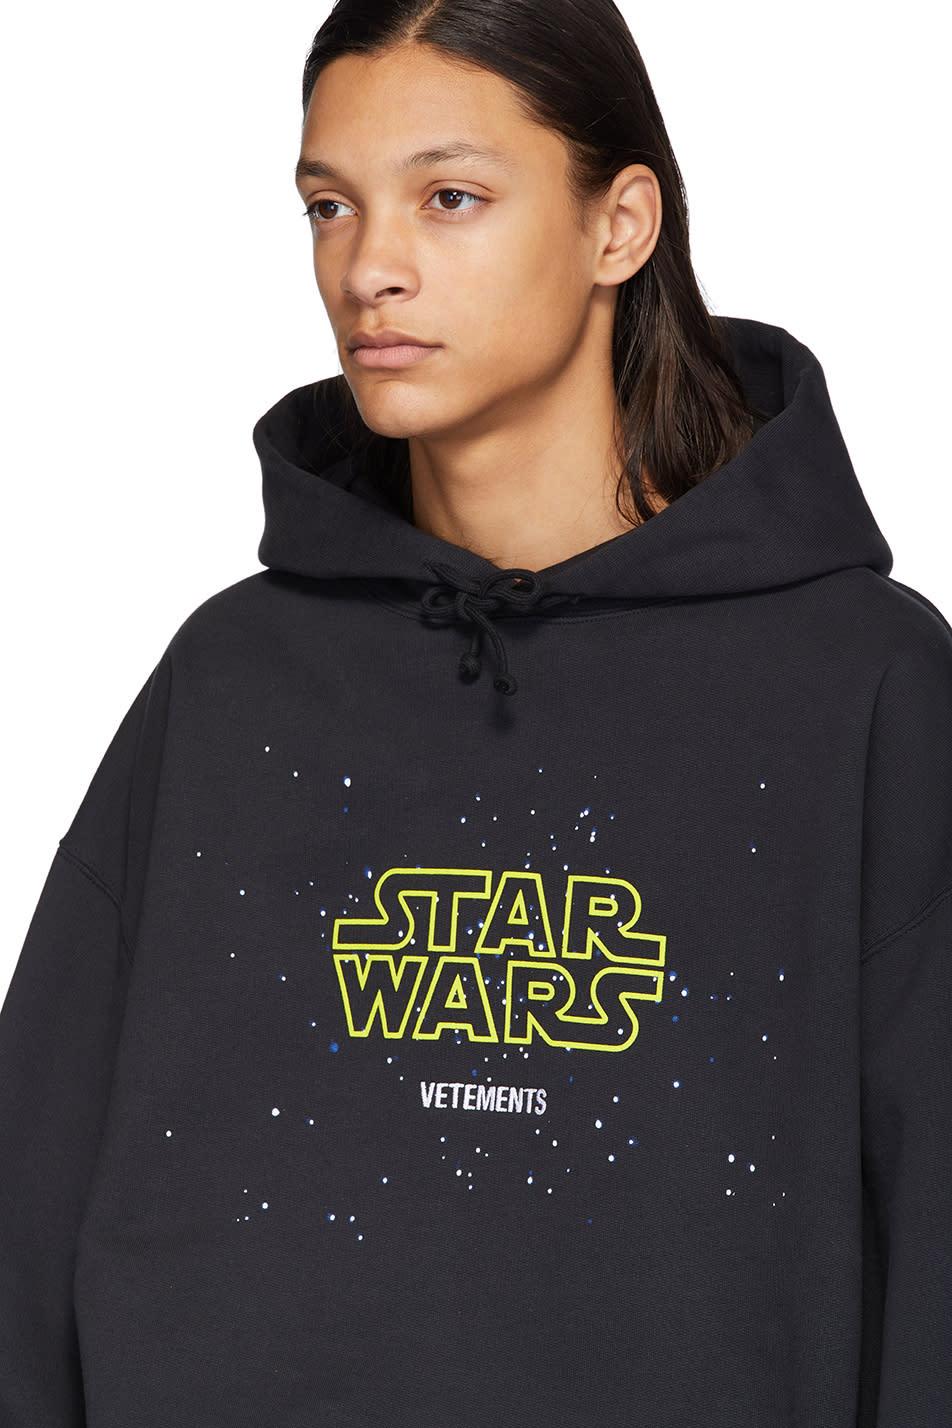 Star Wars Womens Blended Logos Sweatshirt